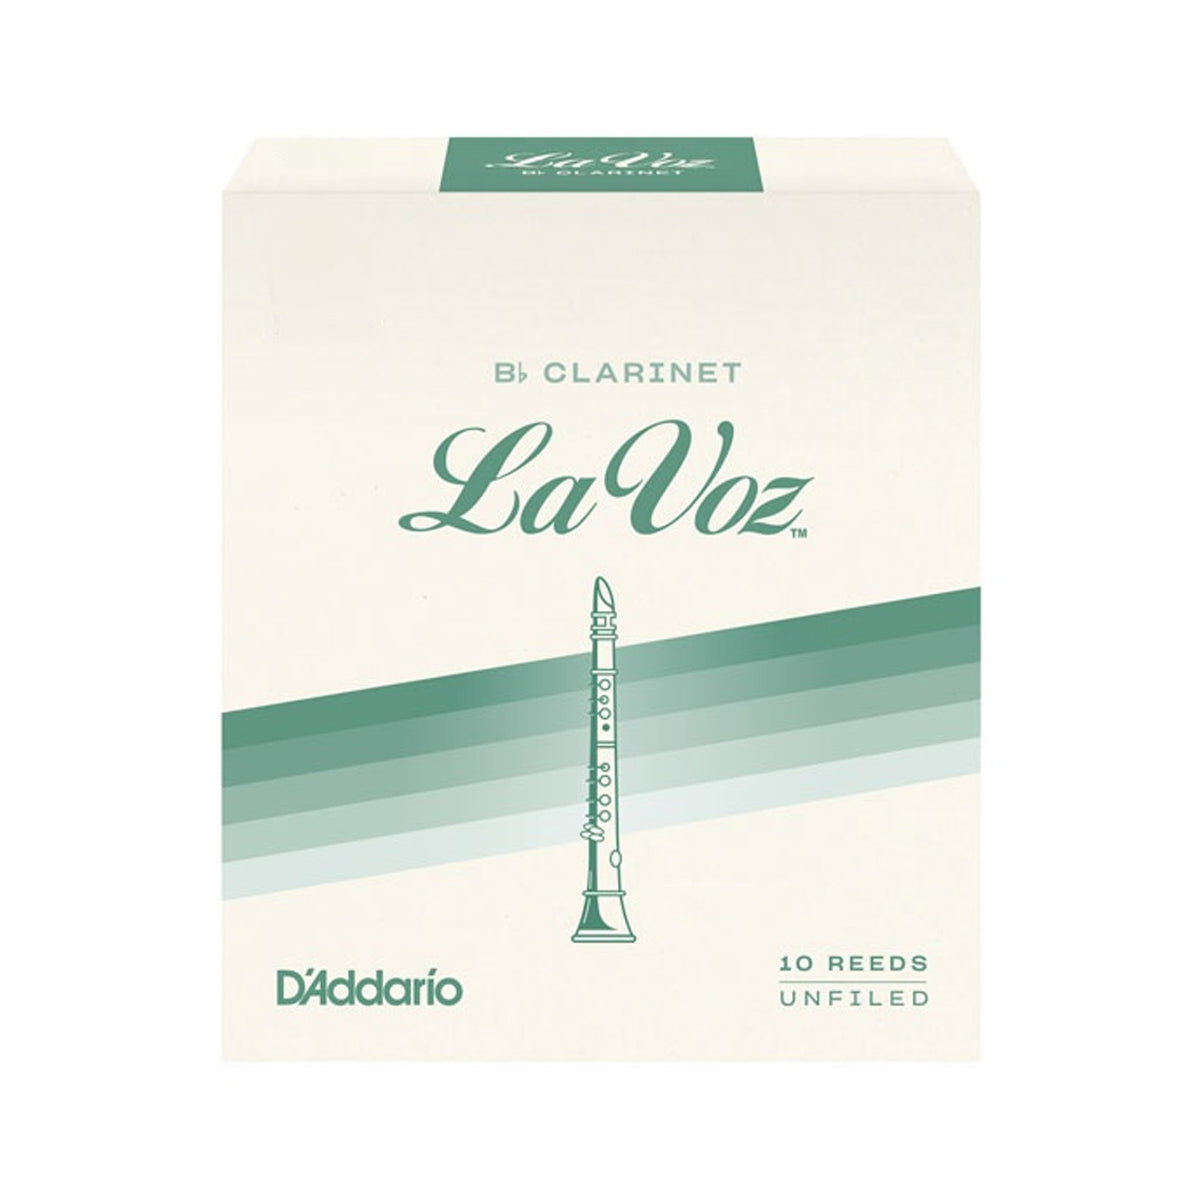 D'Addario RCC10MD La Voz Bb Clarinet Medium Reed - Per Box